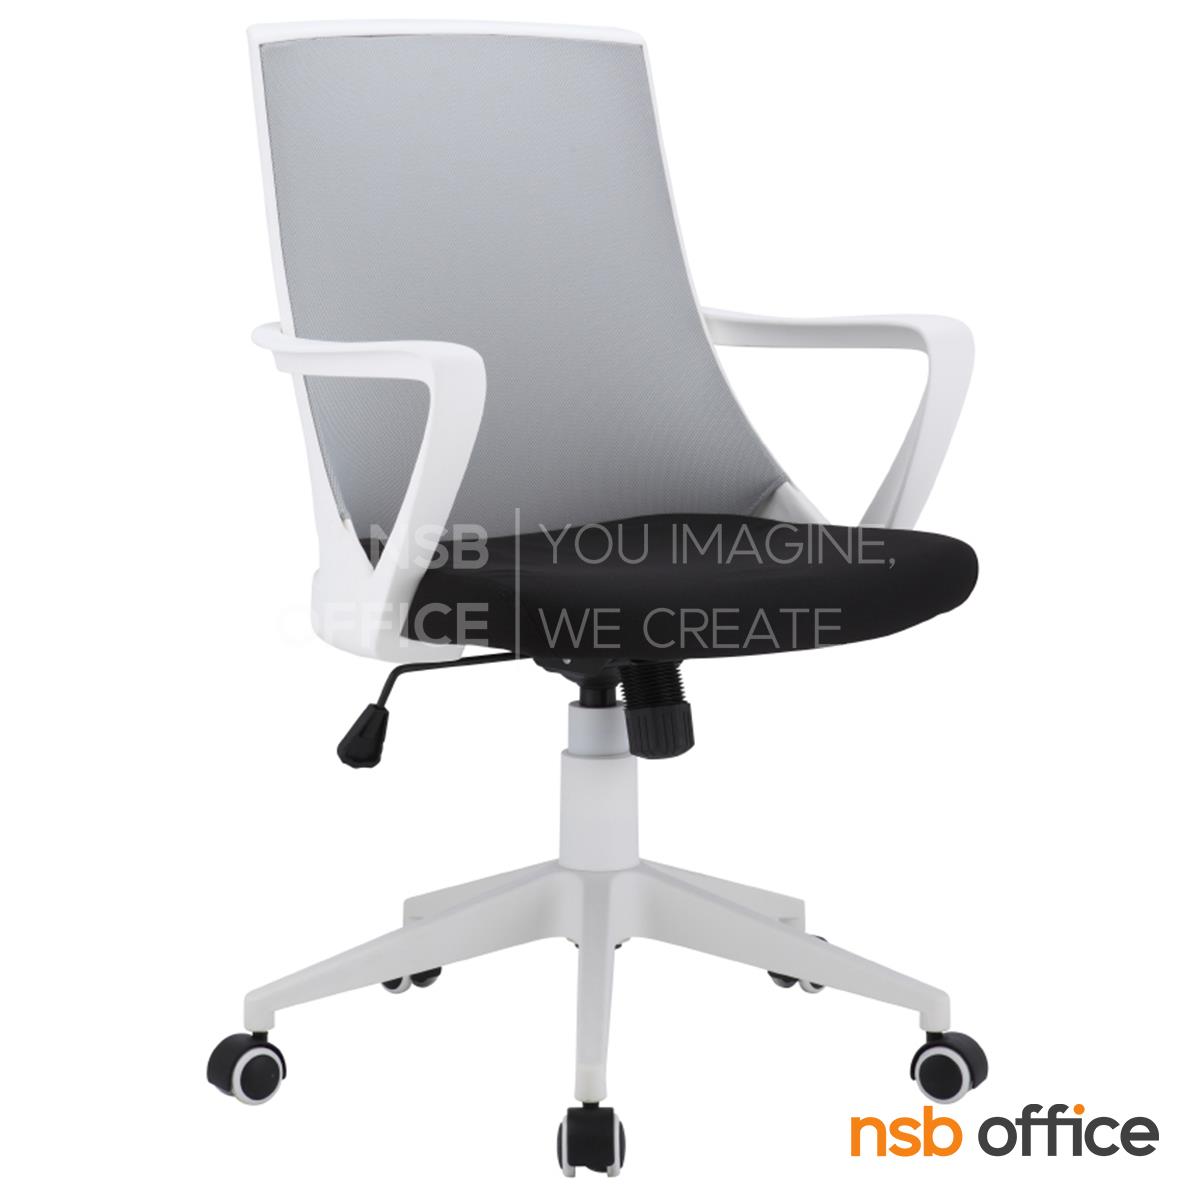 B24A336:เก้าอี้สำนักงานหลังเน็ต  รุ่น Maddox (แมดดอกซ์)  ขาพลาสติก